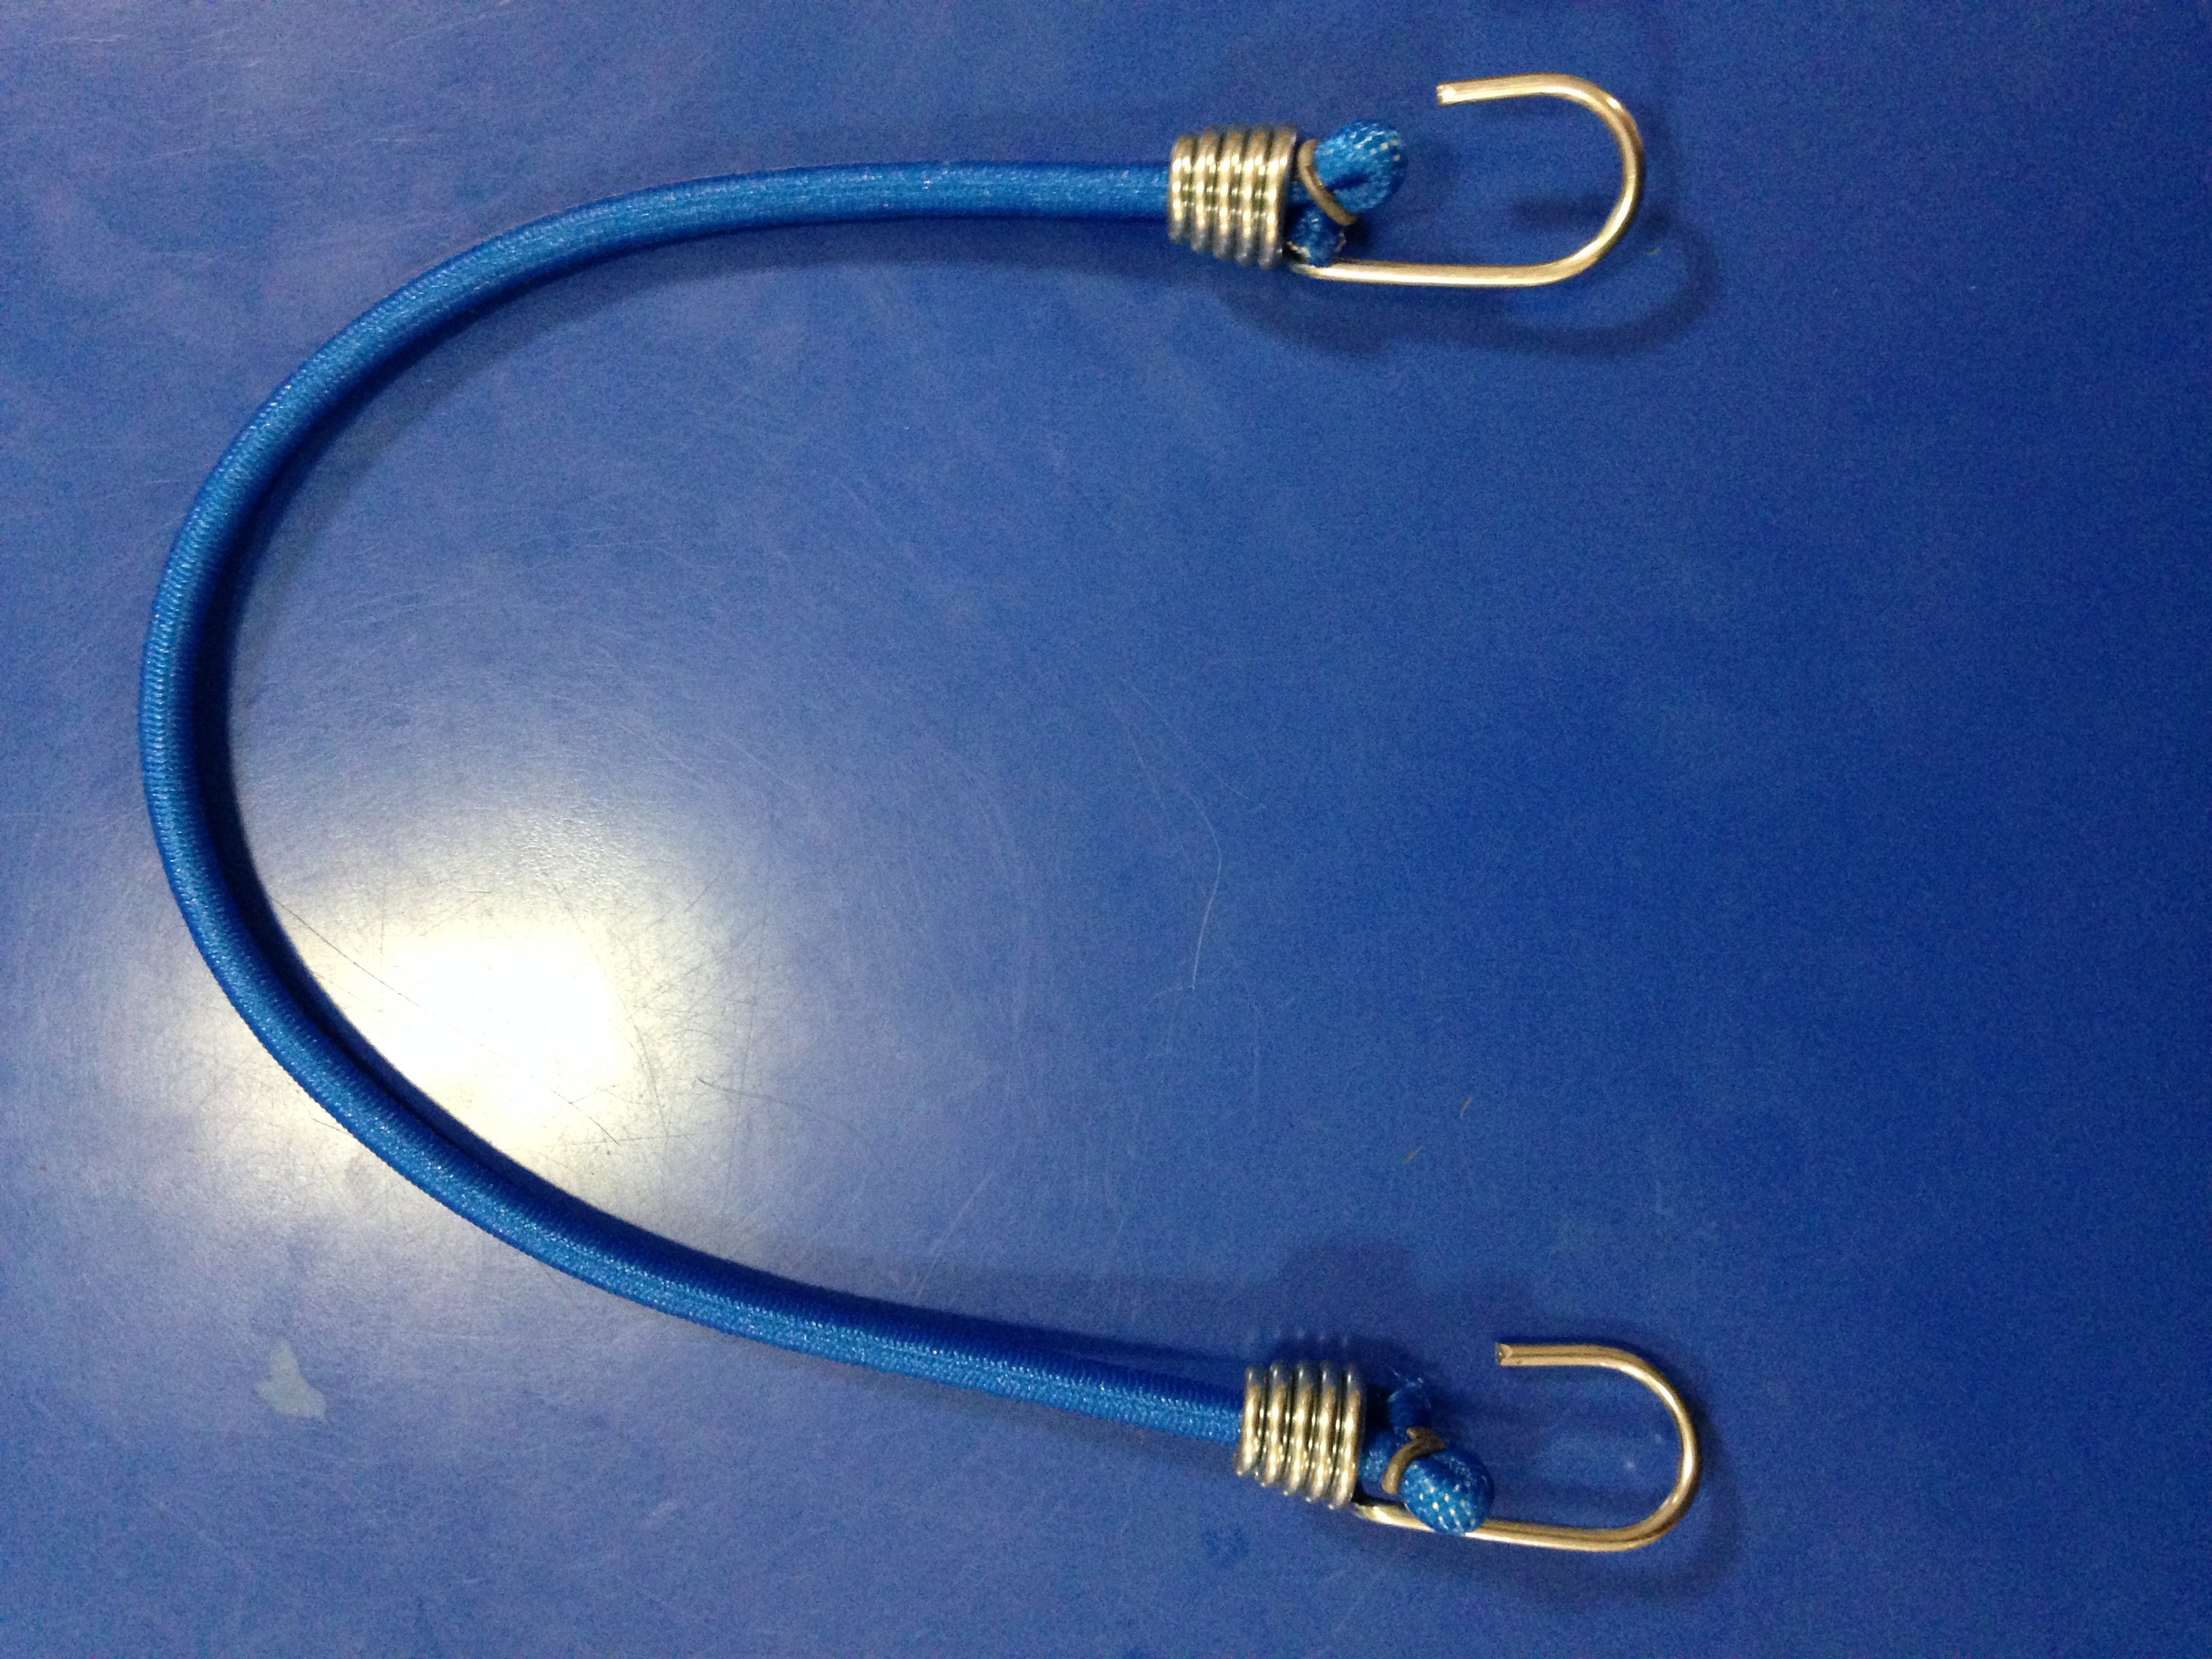 Sandow bleu avec embouts metal 60 cm